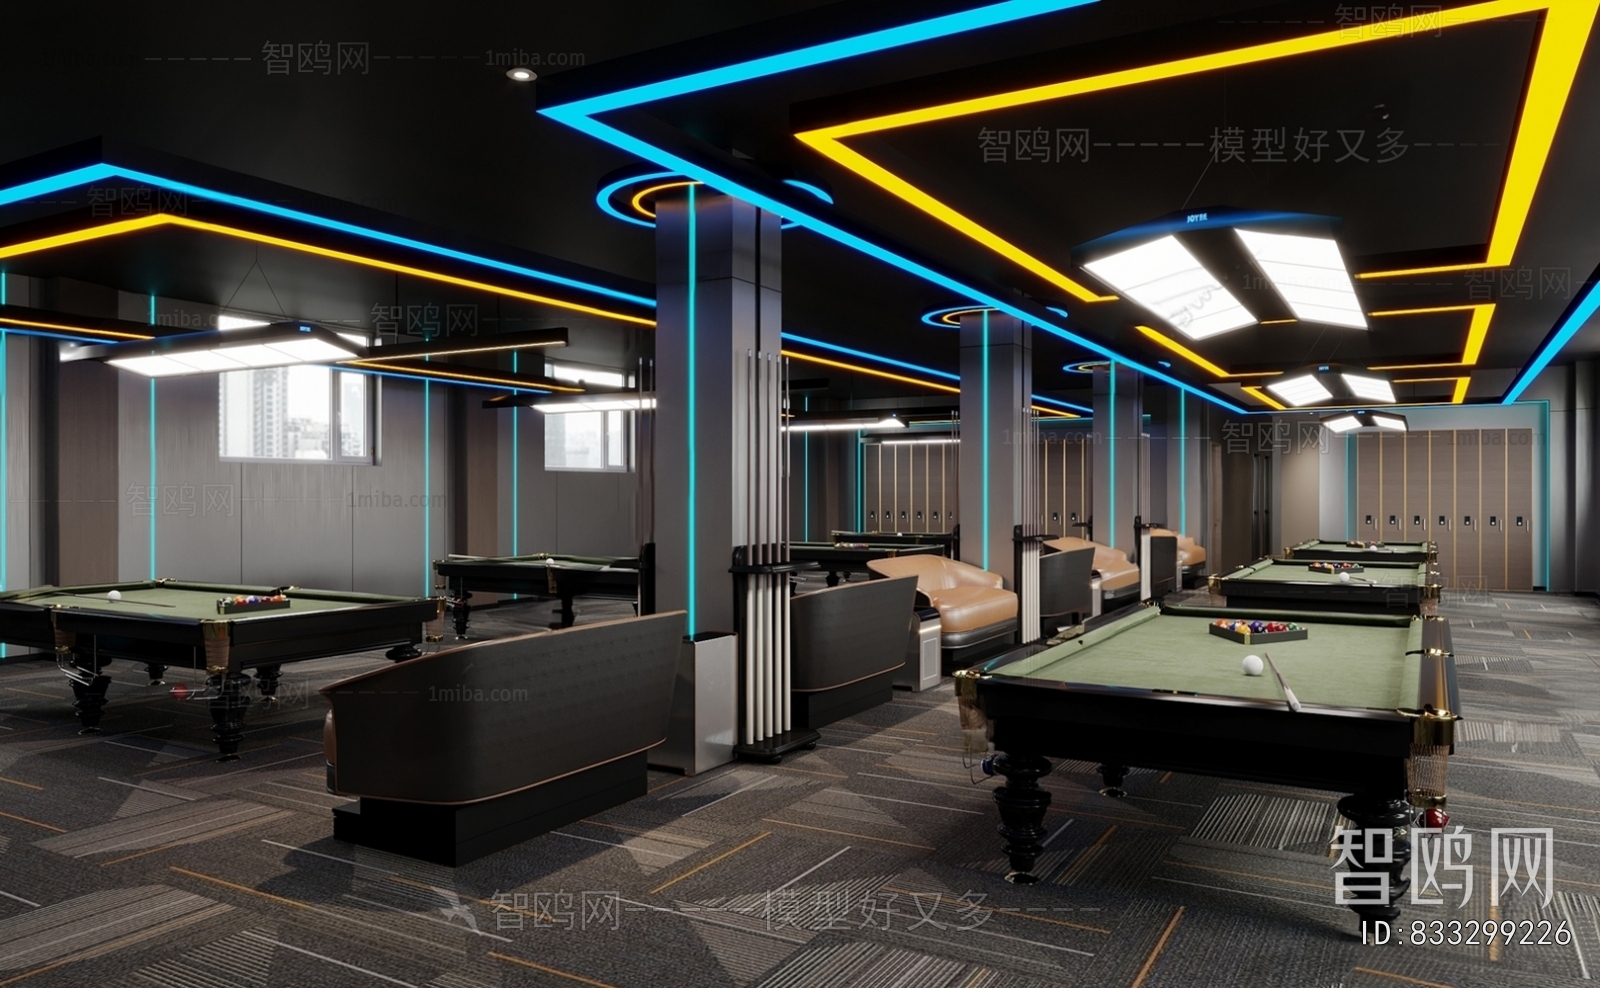 Modern Billiard Room